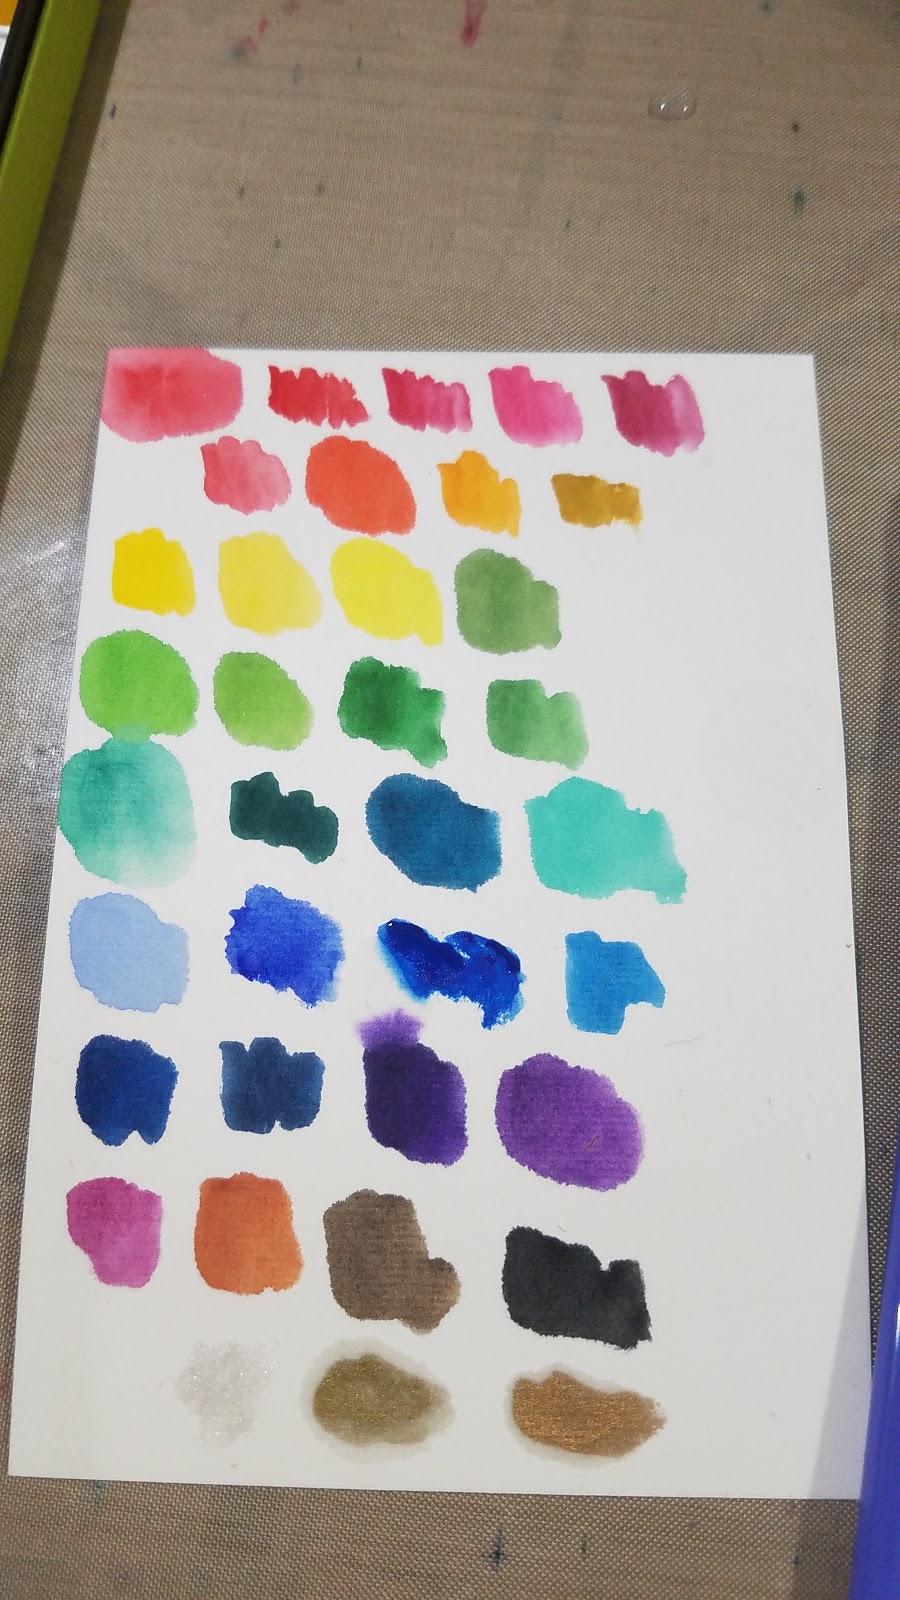 Gansai Tambi Color Chart